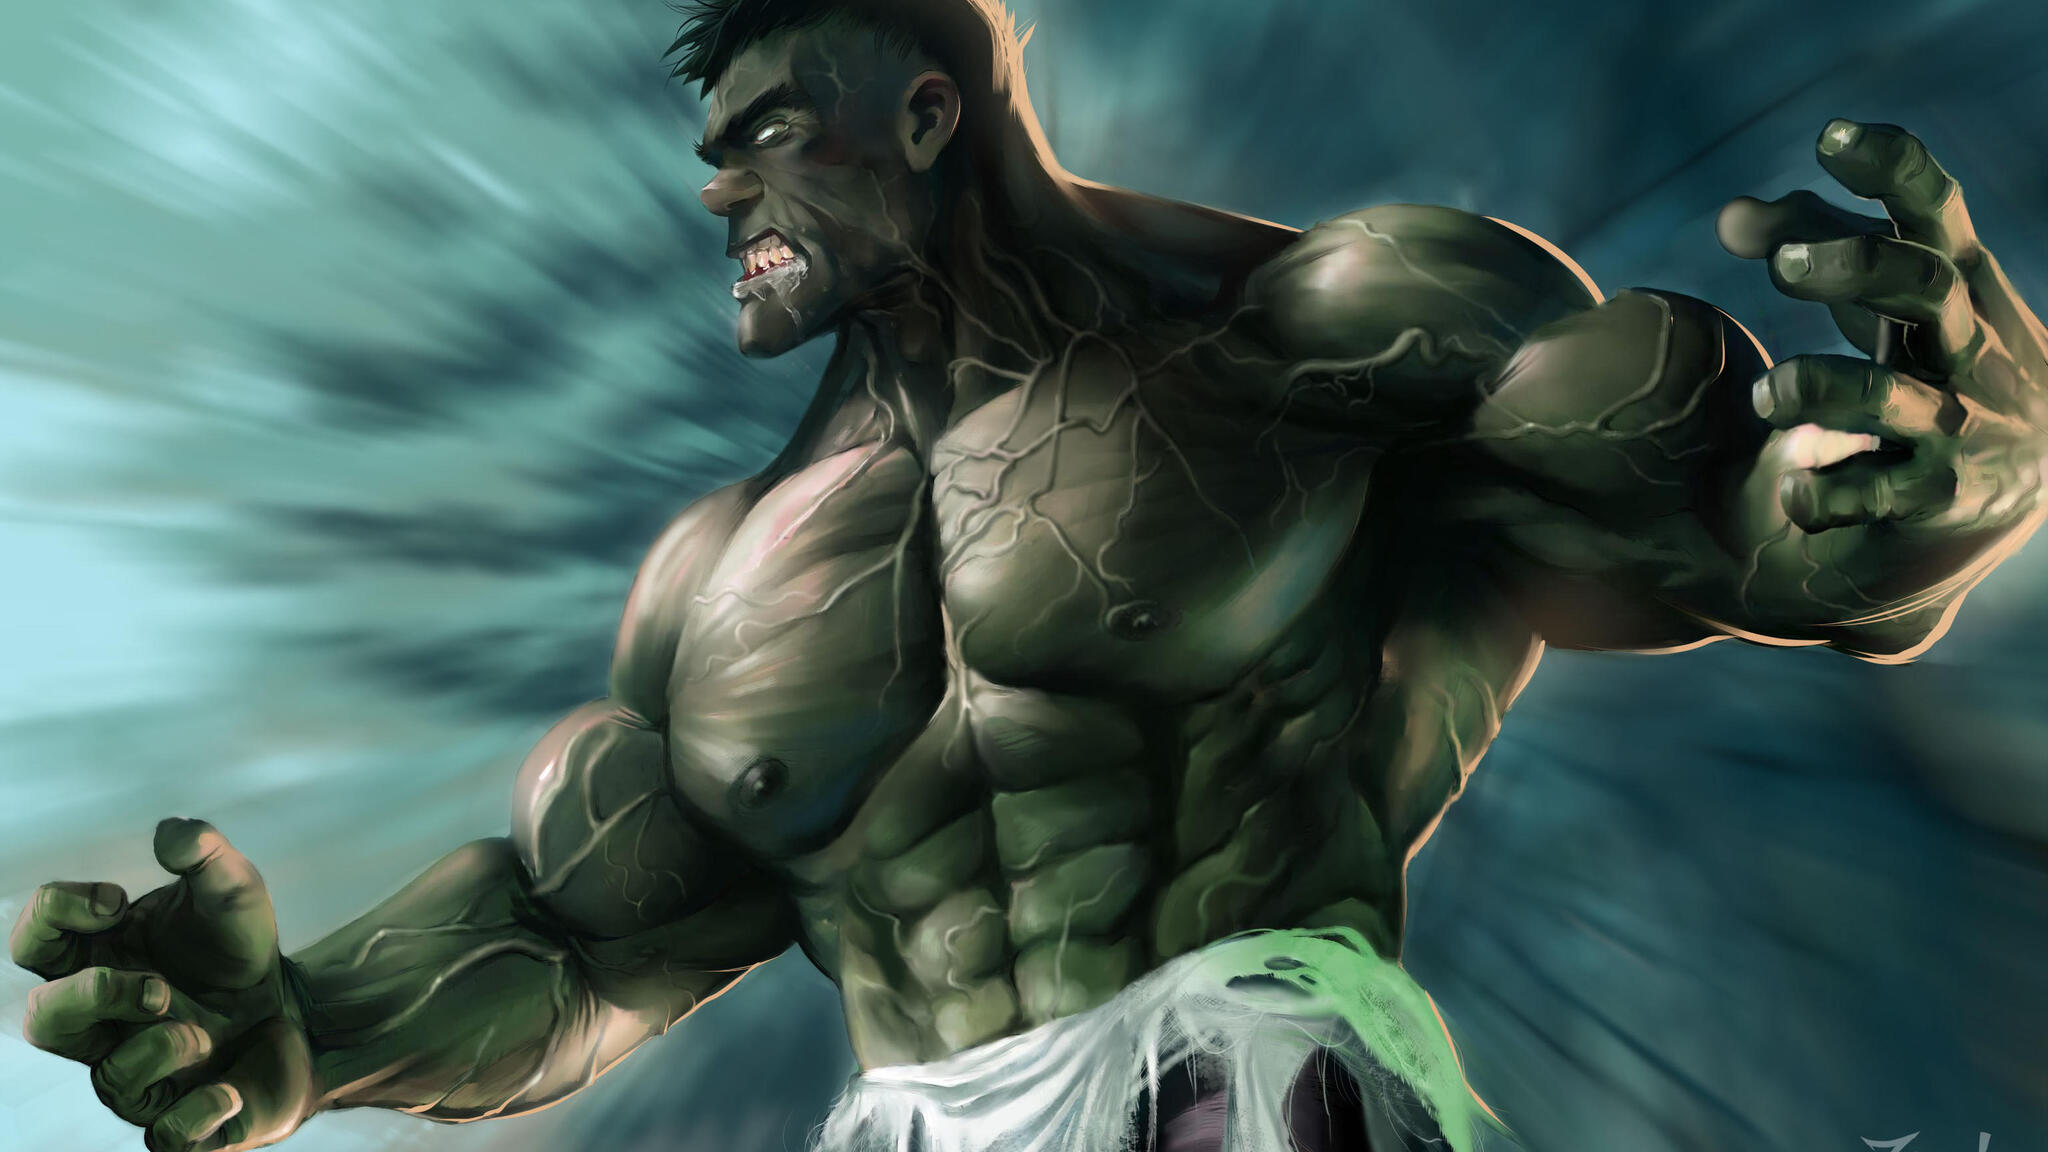 Hulk Smash Artwork In 2048x1152 Resolution. hulk-smash-artwork-sf.jpg. 